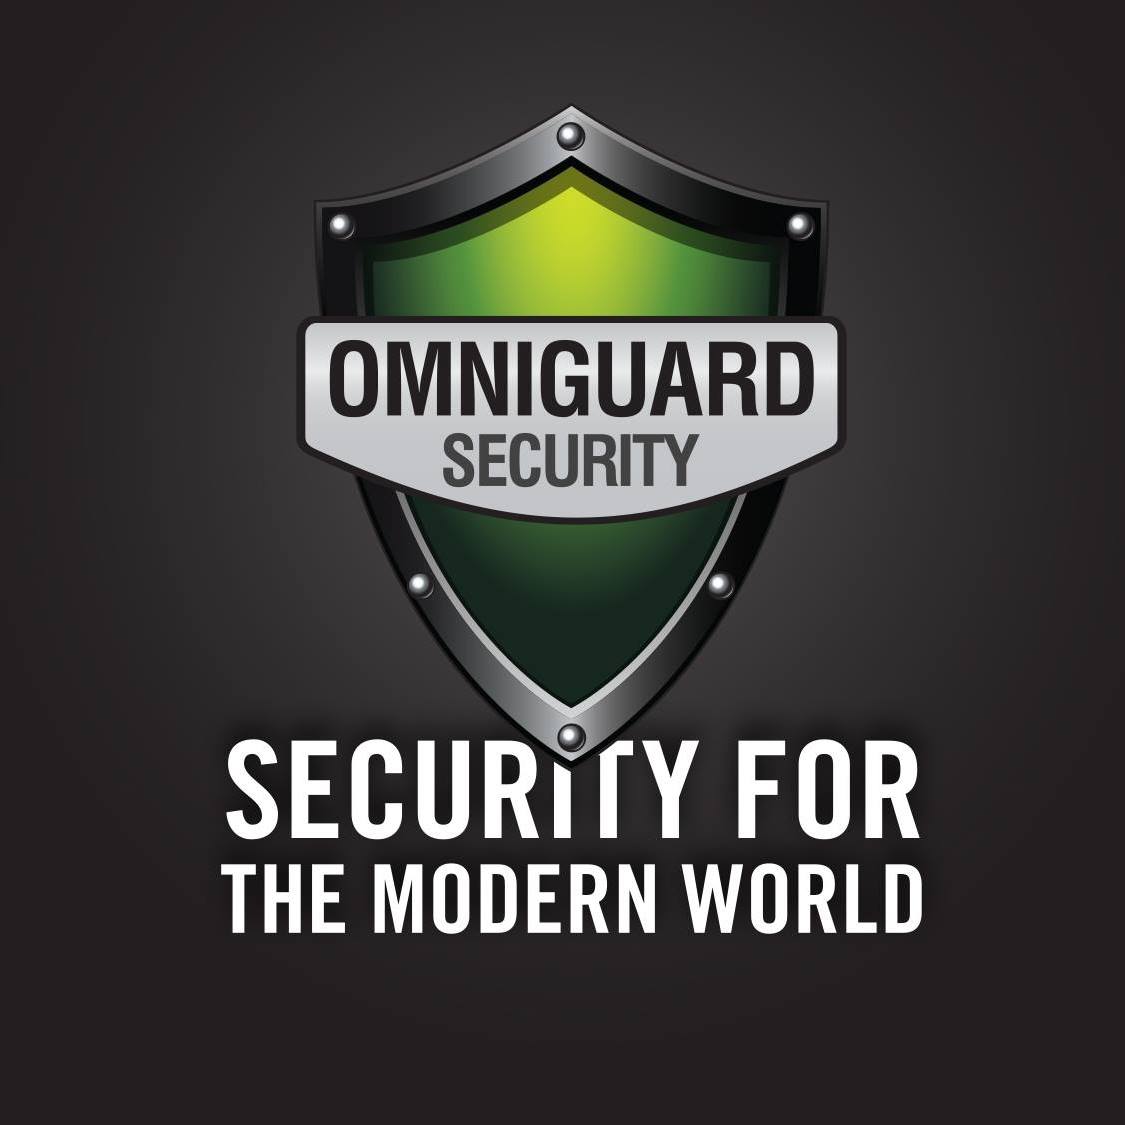 OmniGuard security